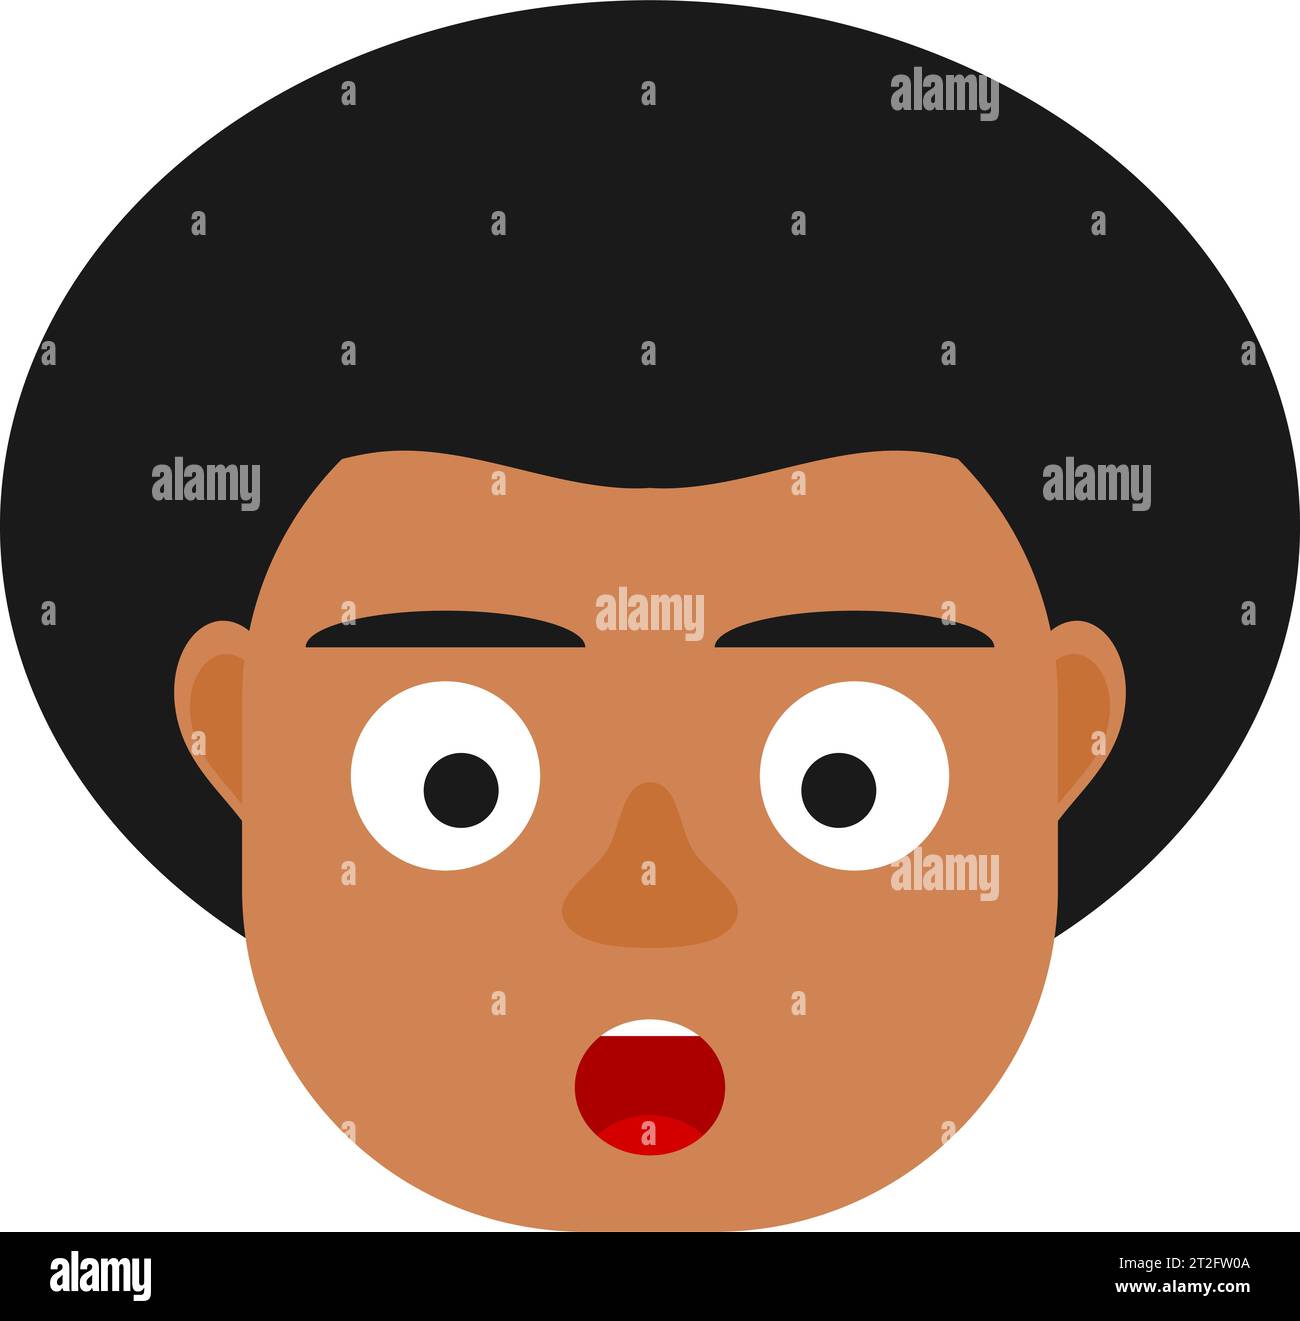 Male man boy black tone people - Avatar & Emoticons Icons